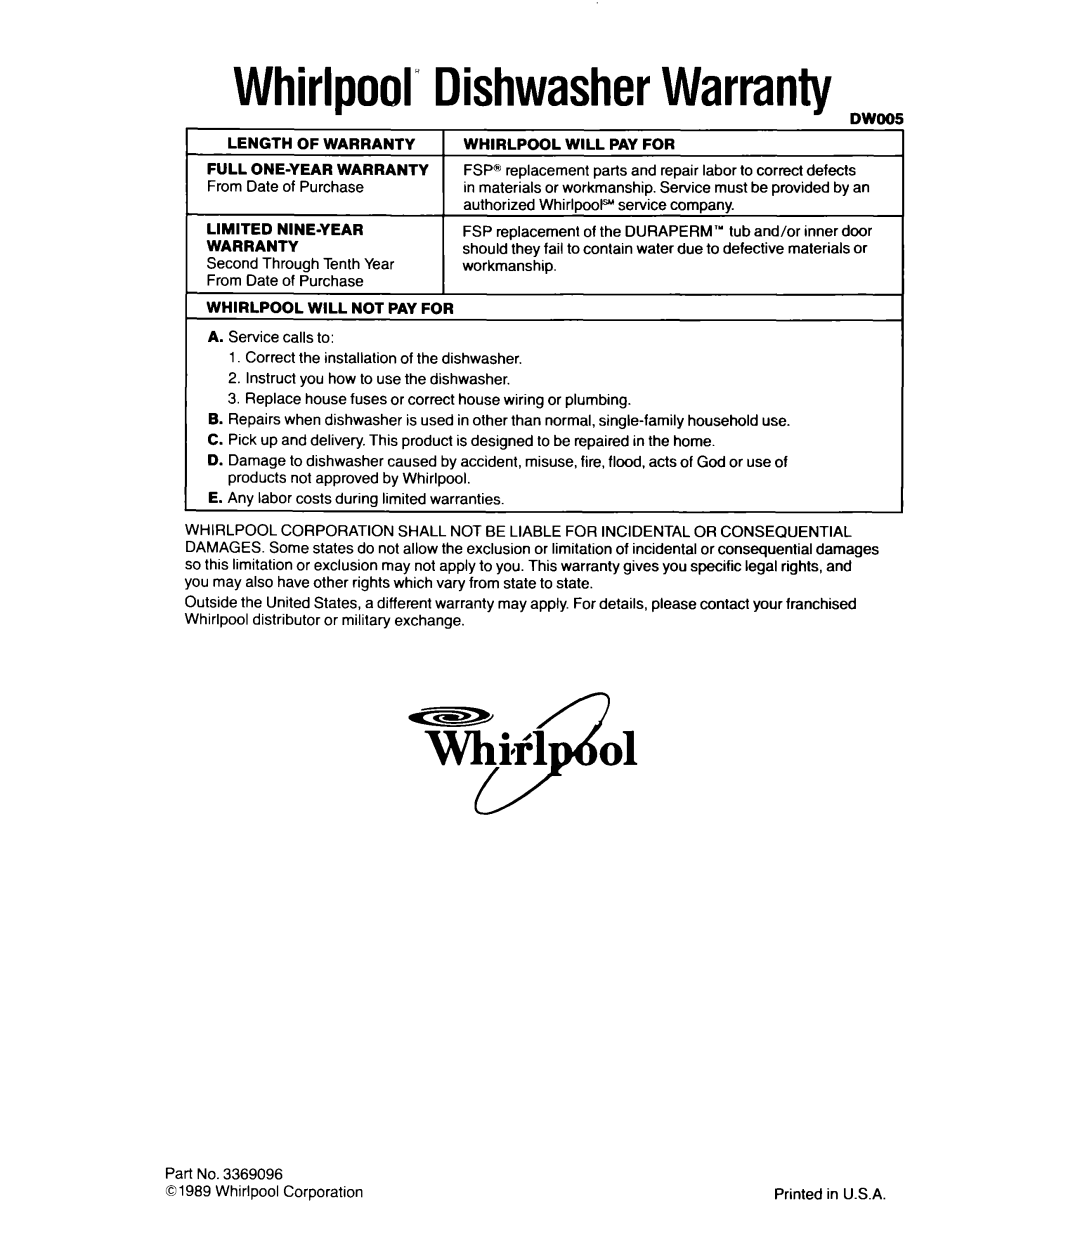 Whirlpool DU5200XW manual Whirlpool”DishwasherWarranty 